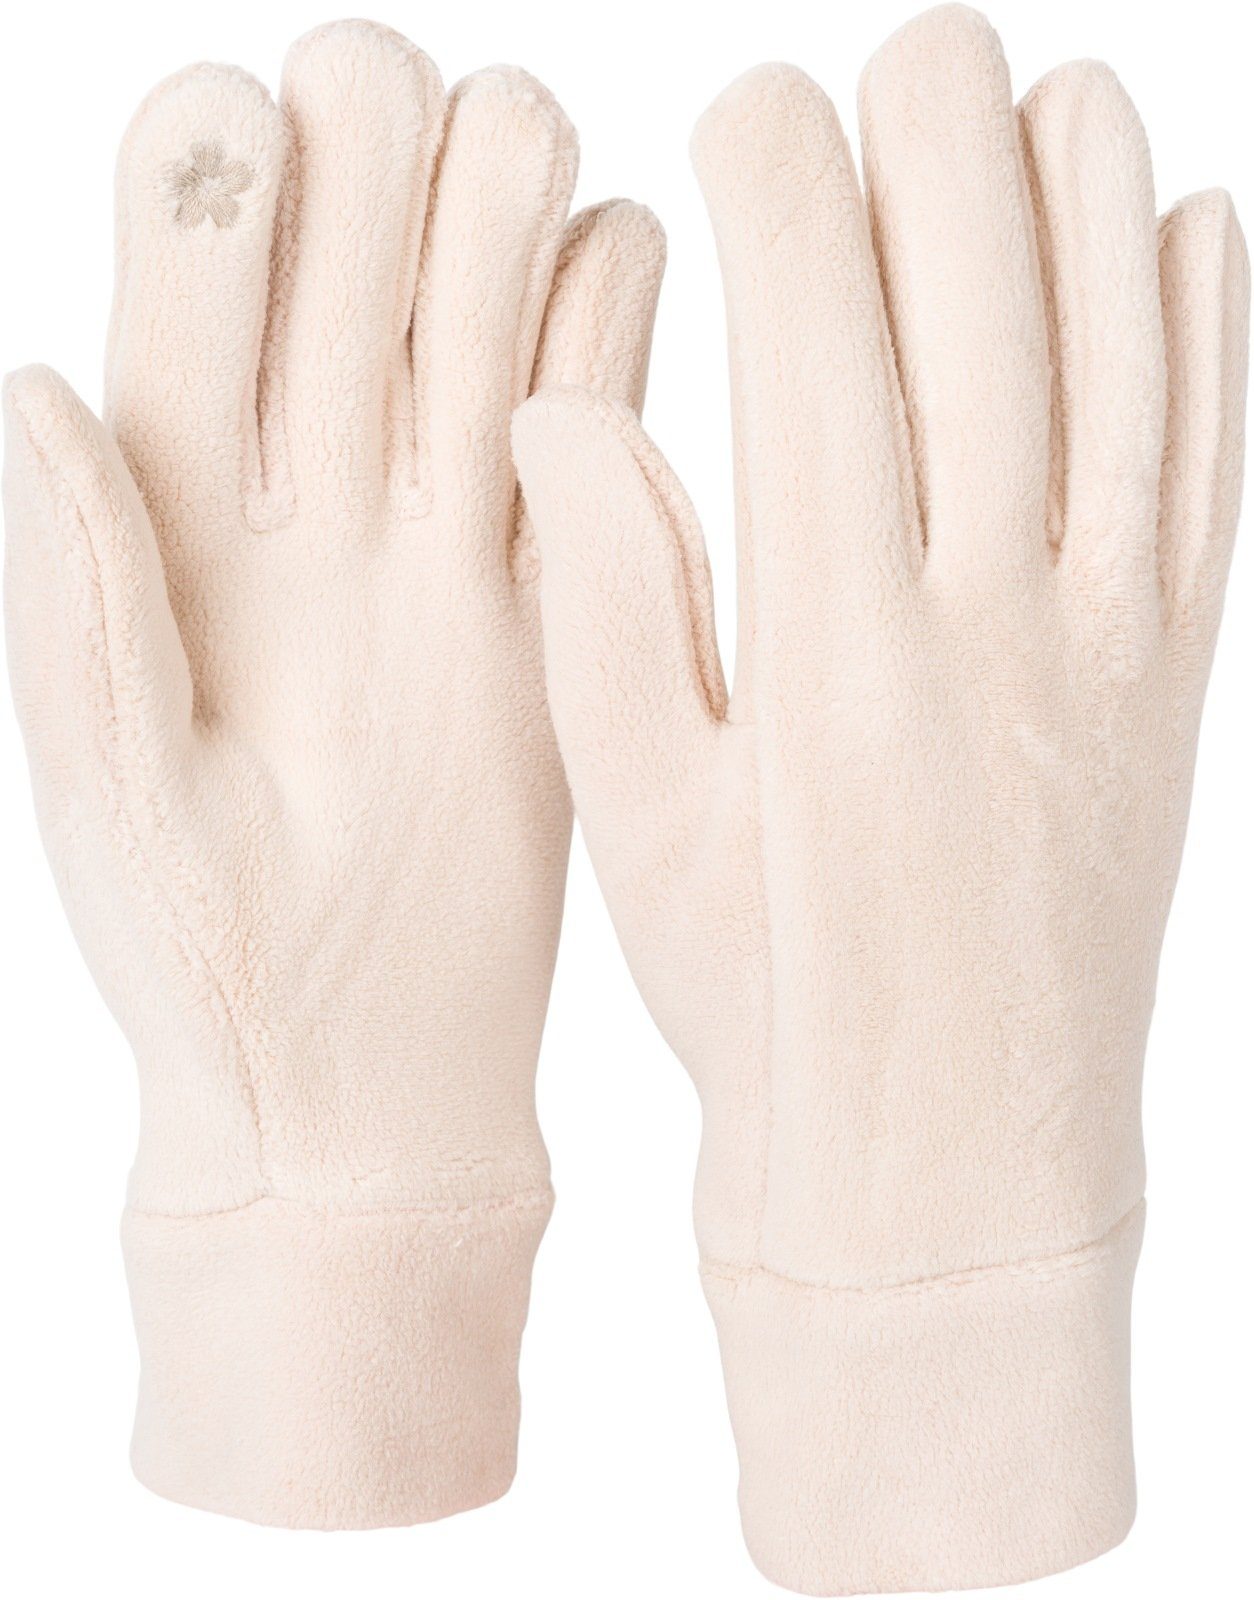 styleBREAKER Fleecehandschuhe Einfarbige Touchscreen Fleece Handschuhe Beige